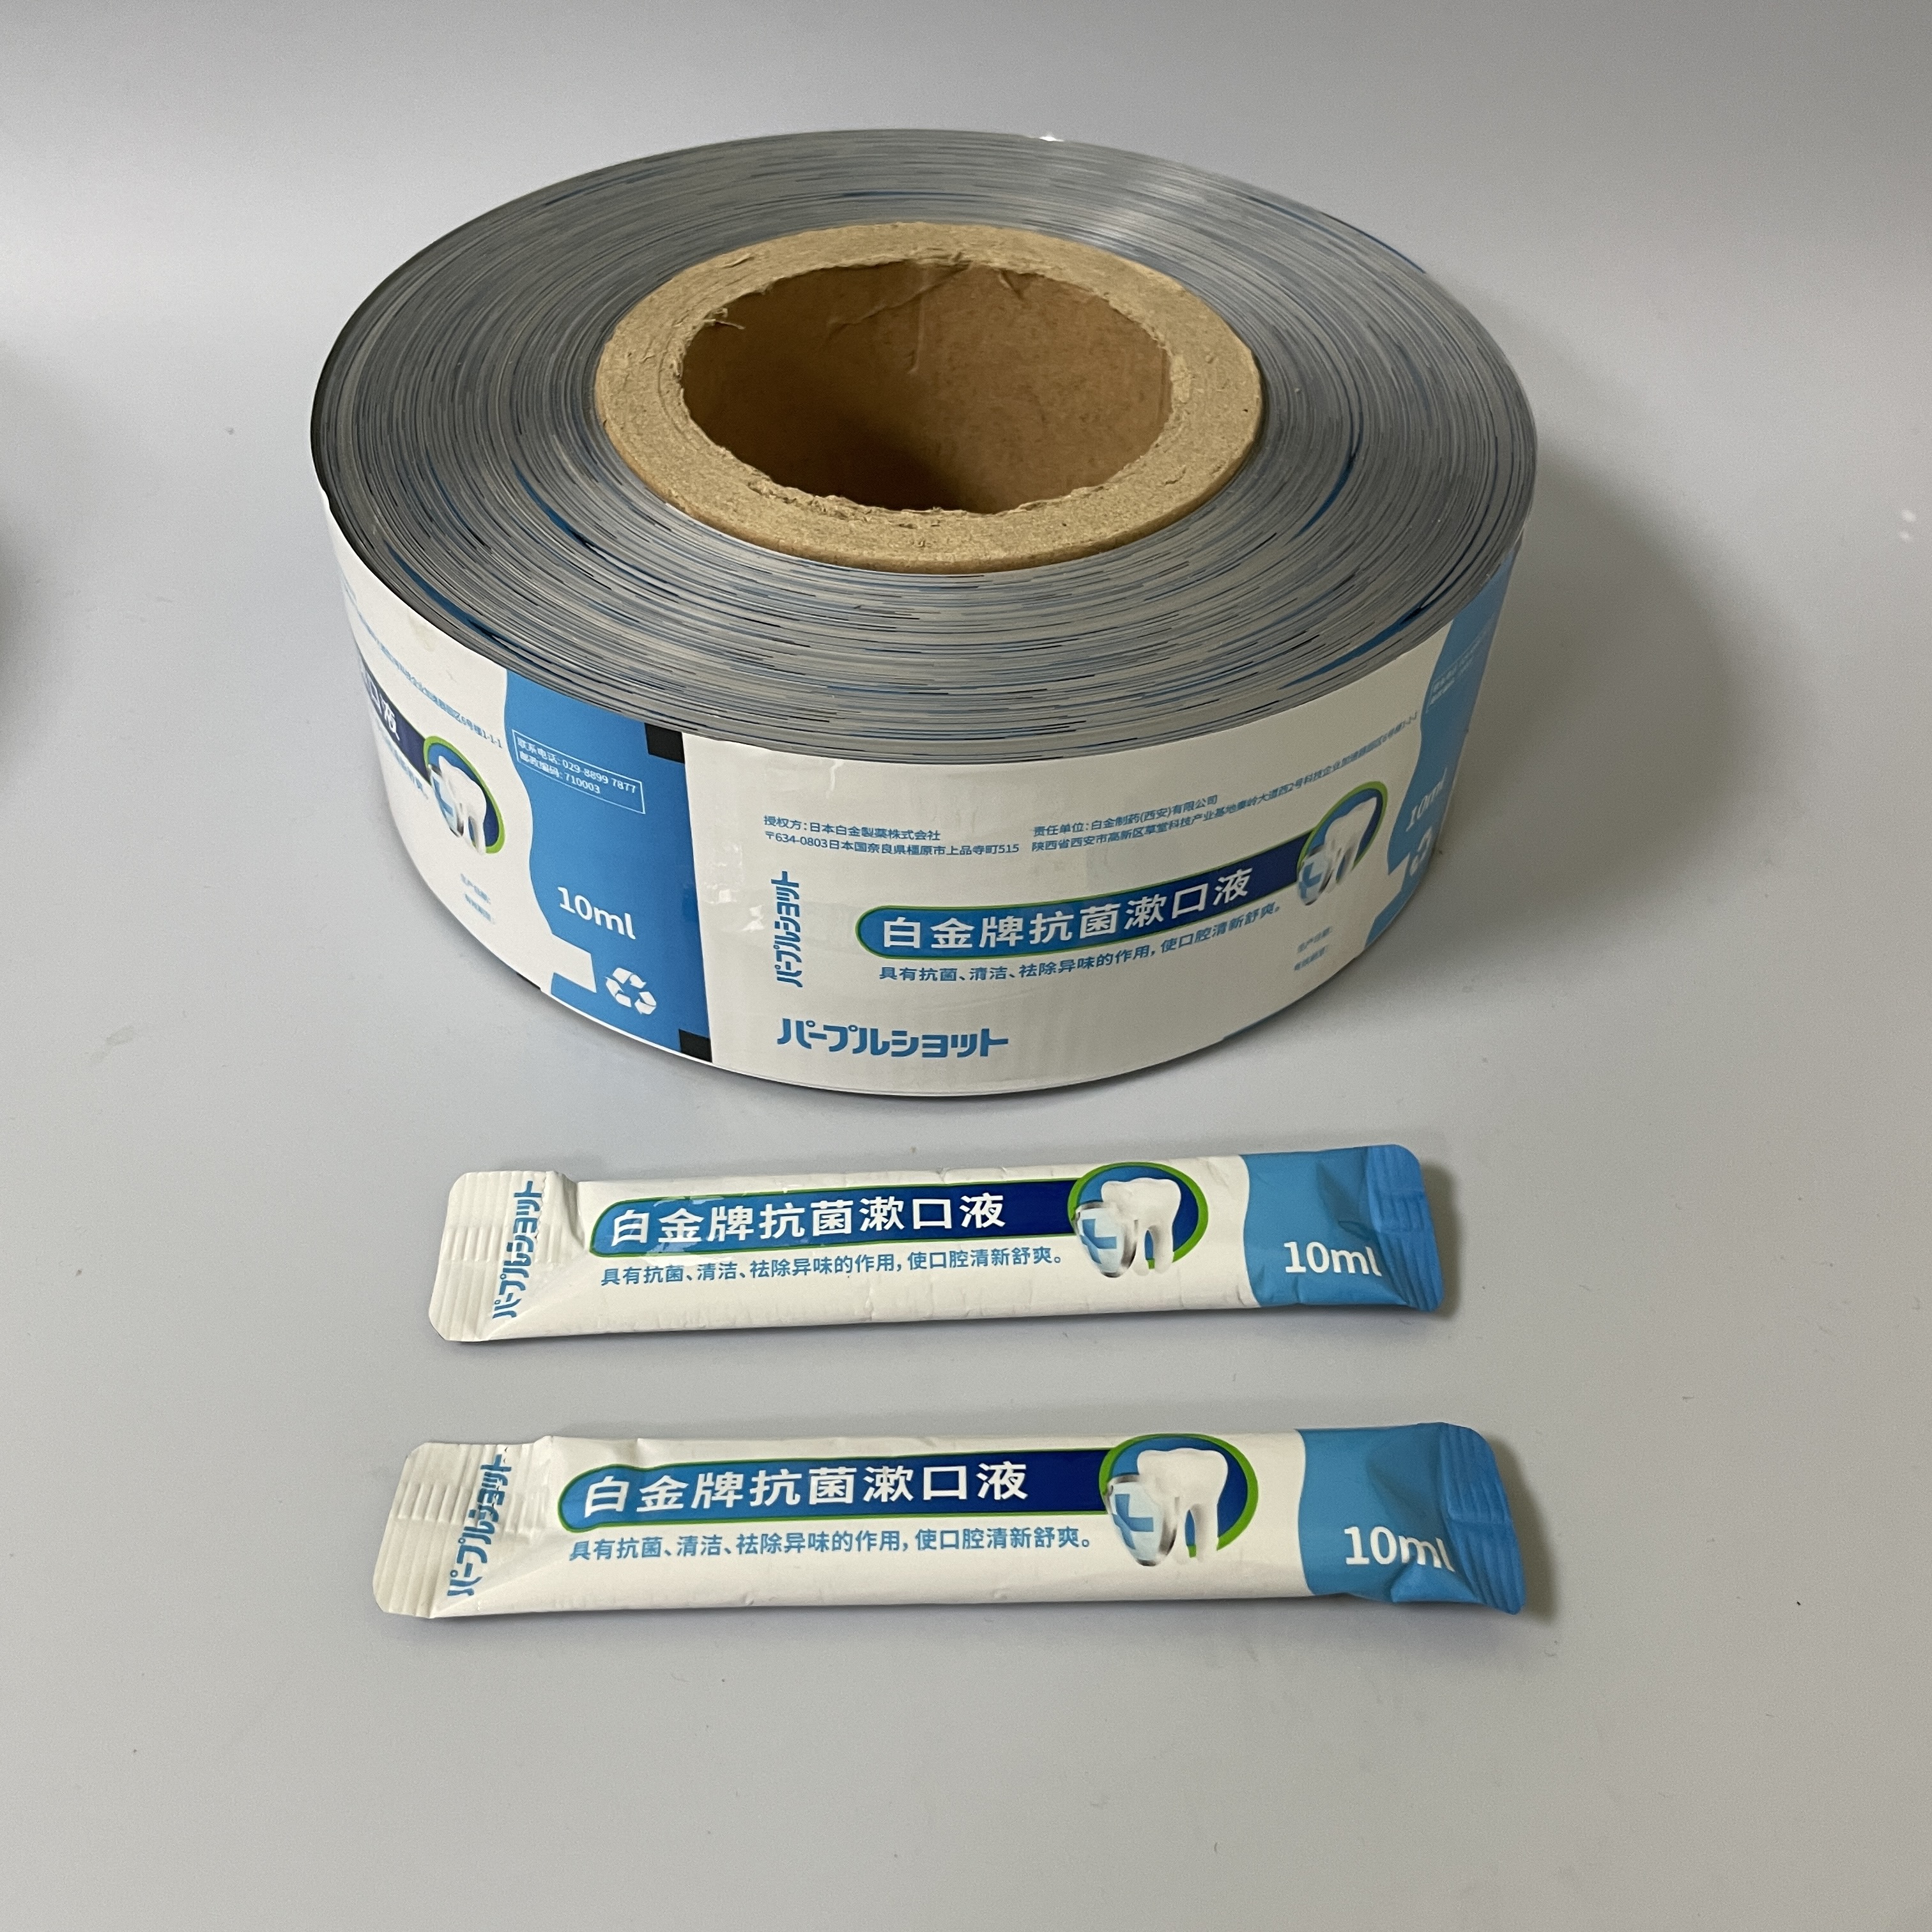 Mouthwash strip packaging roll film វត្ថុរាវថែរក្សាស្បែក របស់ប្រើប្រាស់ប្រចាំថ្ងៃ ម៉ាស៊ីនវេចខ្ចប់ដោយស្វ័យប្រវត្តិ roll filmShort